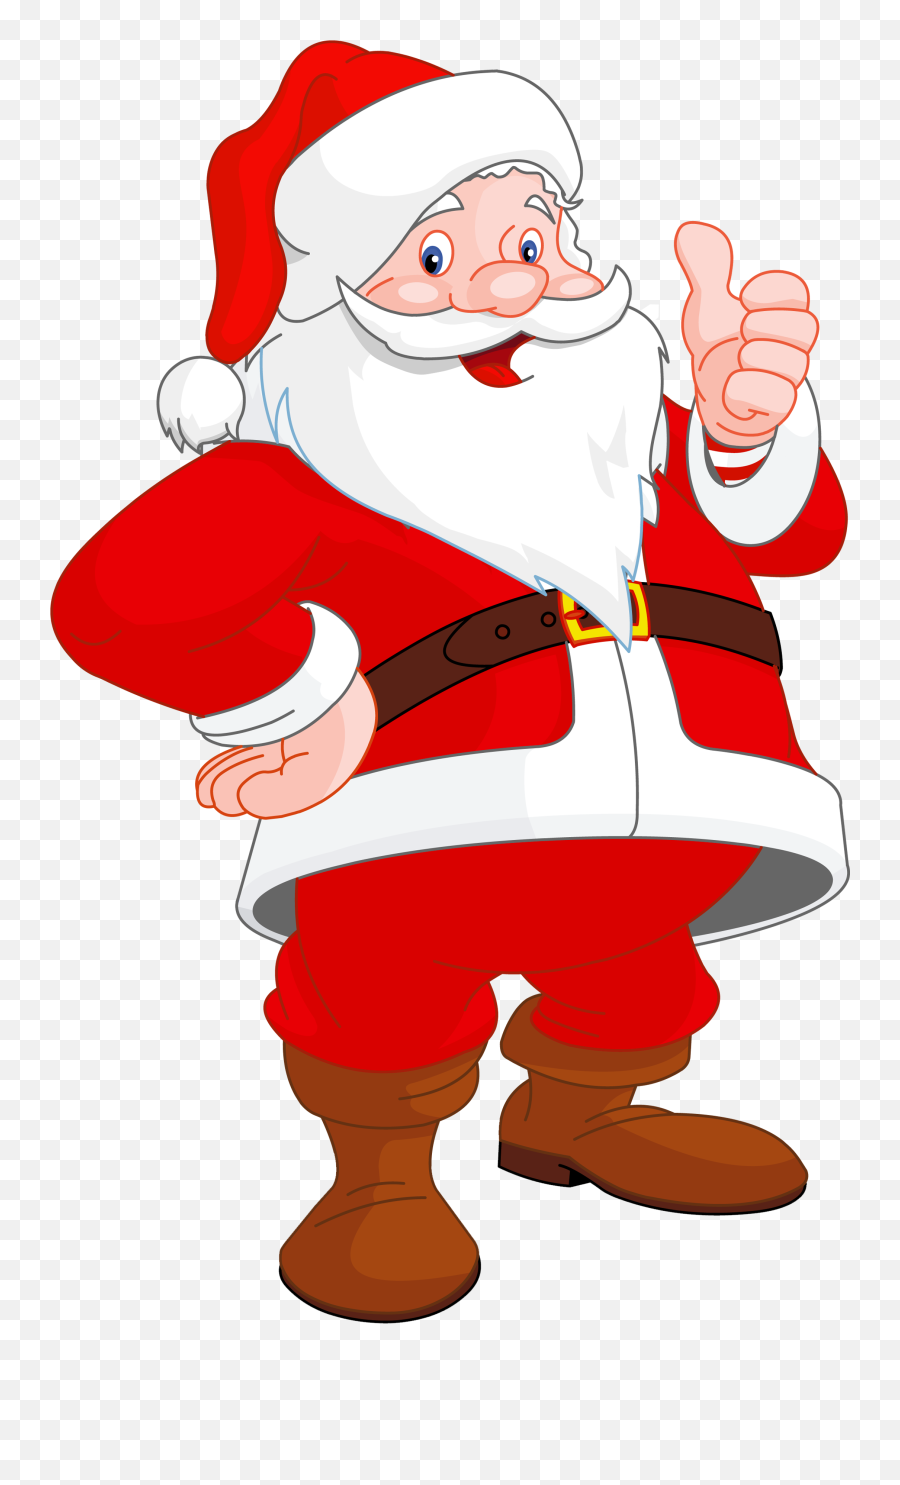 Download Hd Santa Claus Png Image - Santa Claus Transparent Santa Claus Png Funny,Santa Claus Transparent Background